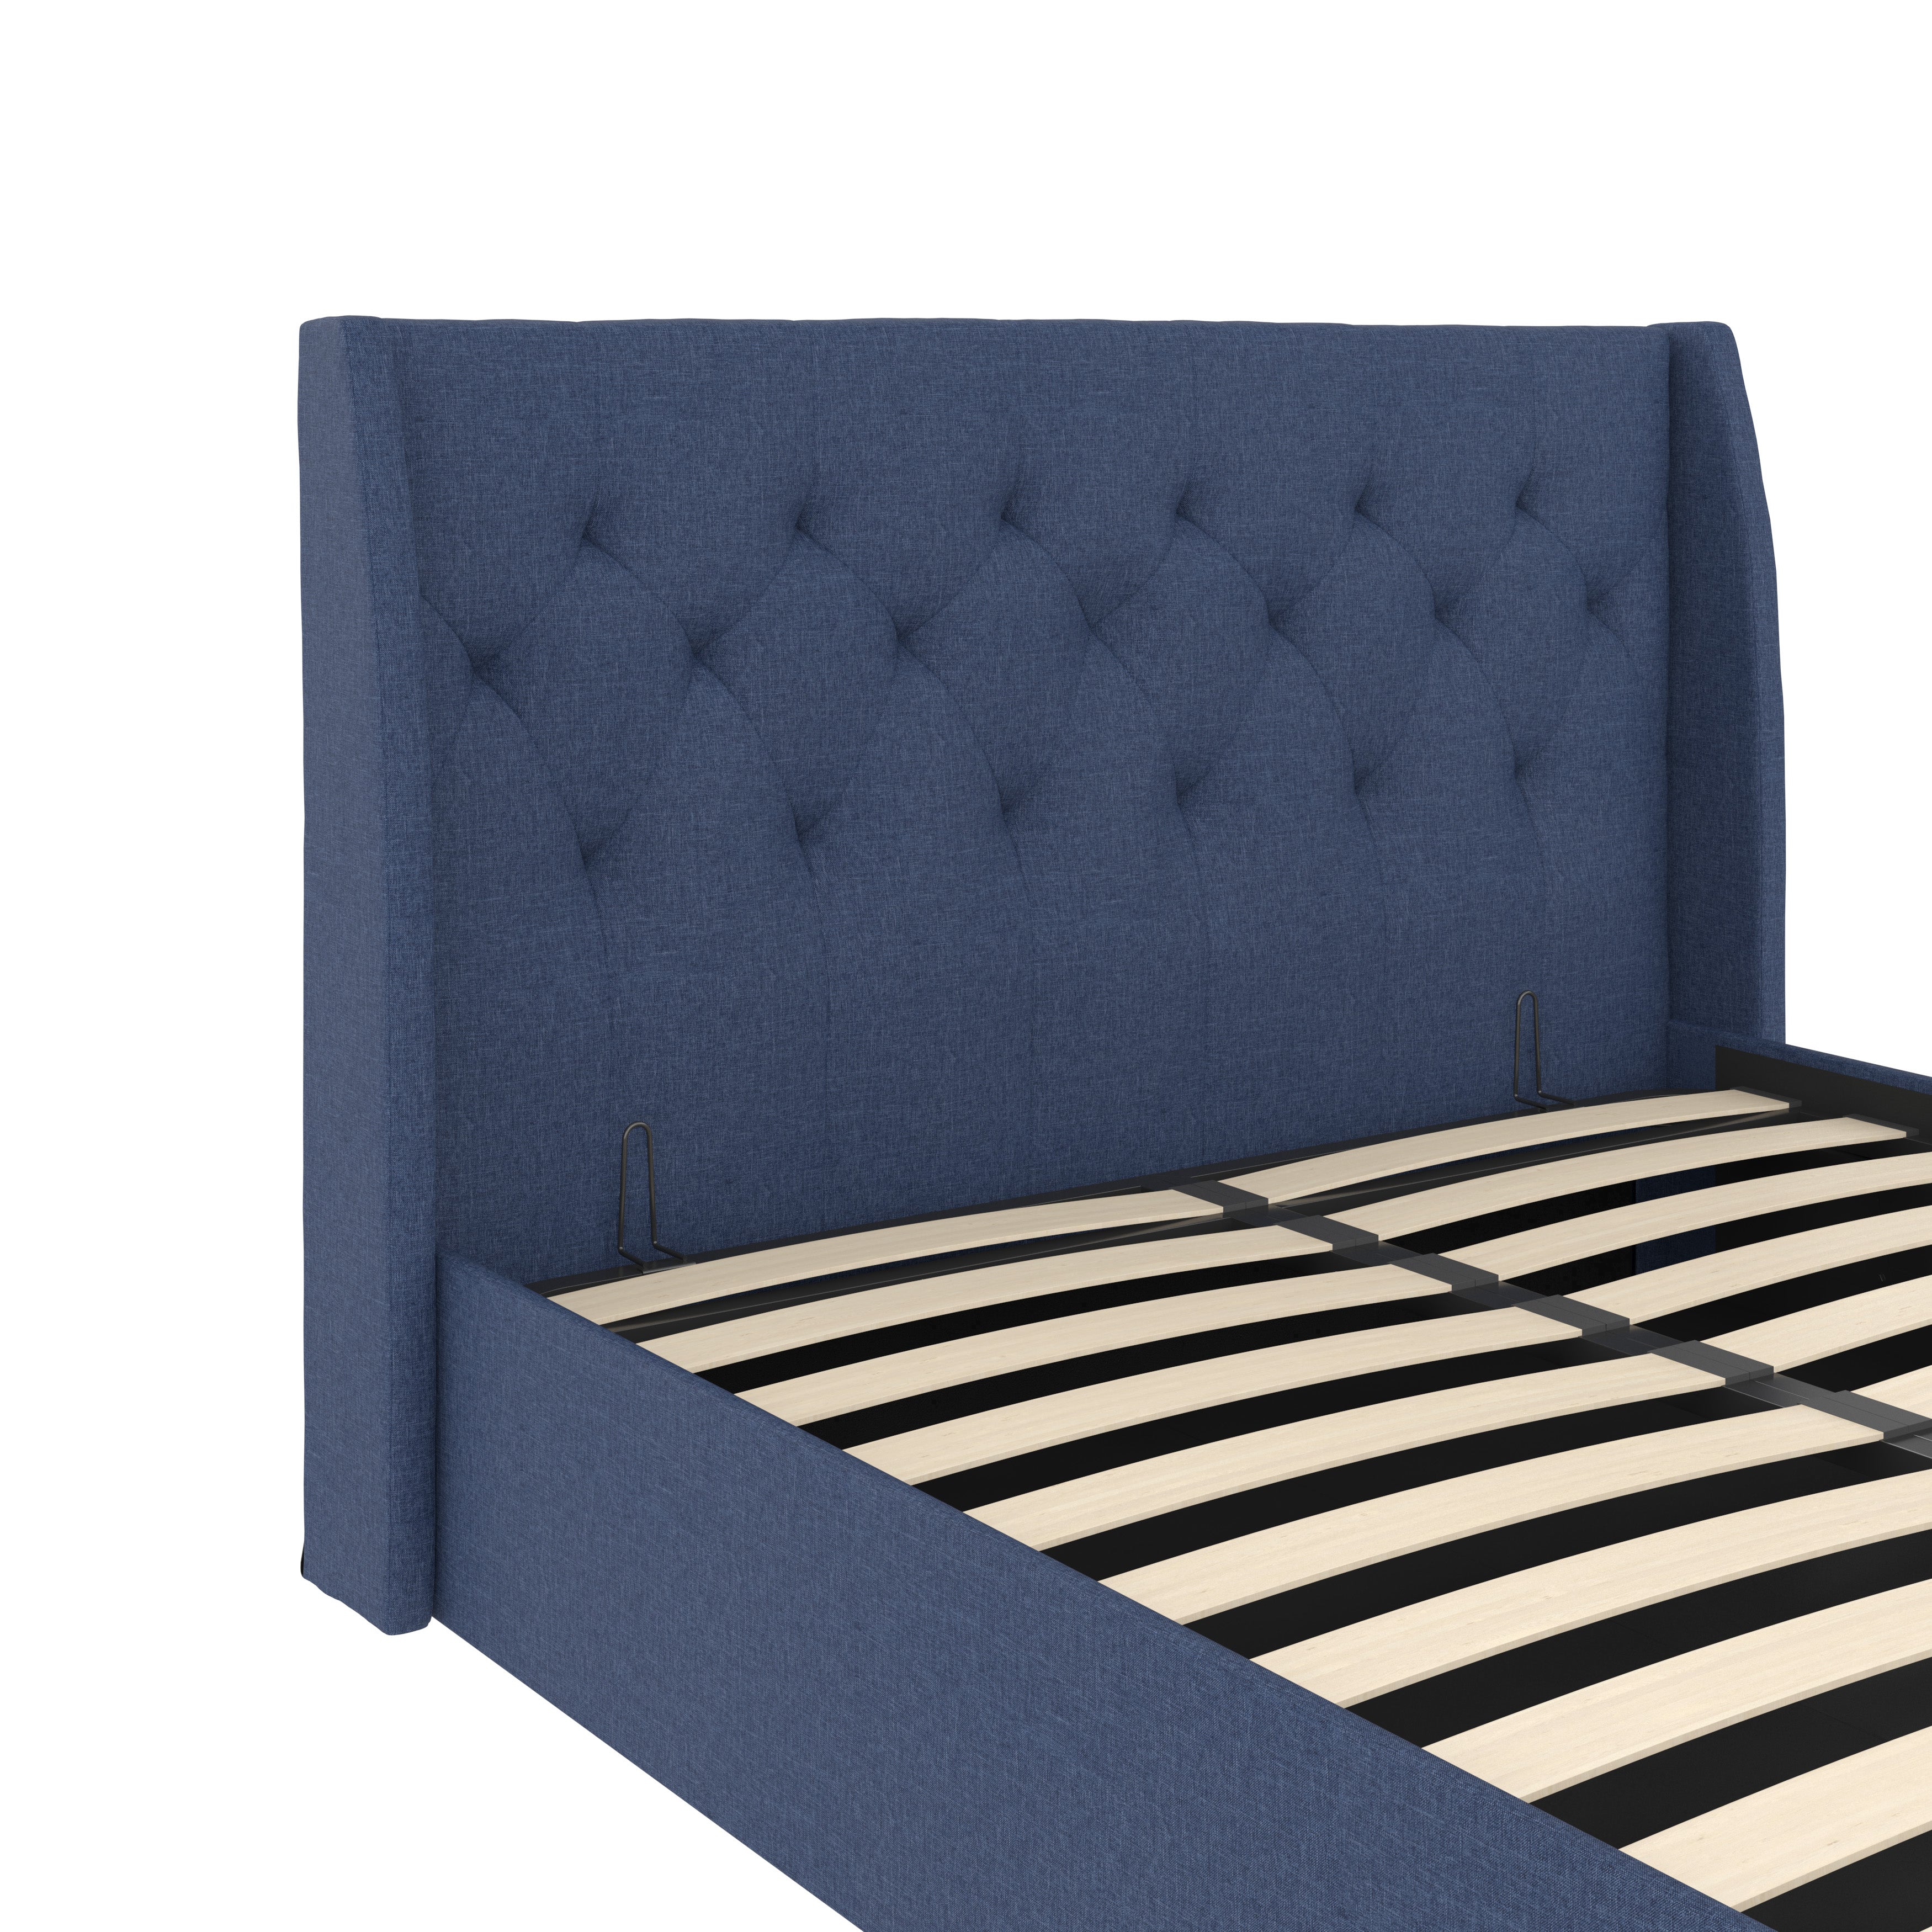 Her Majesty Velvet Upholstered Bed – The Novogratz